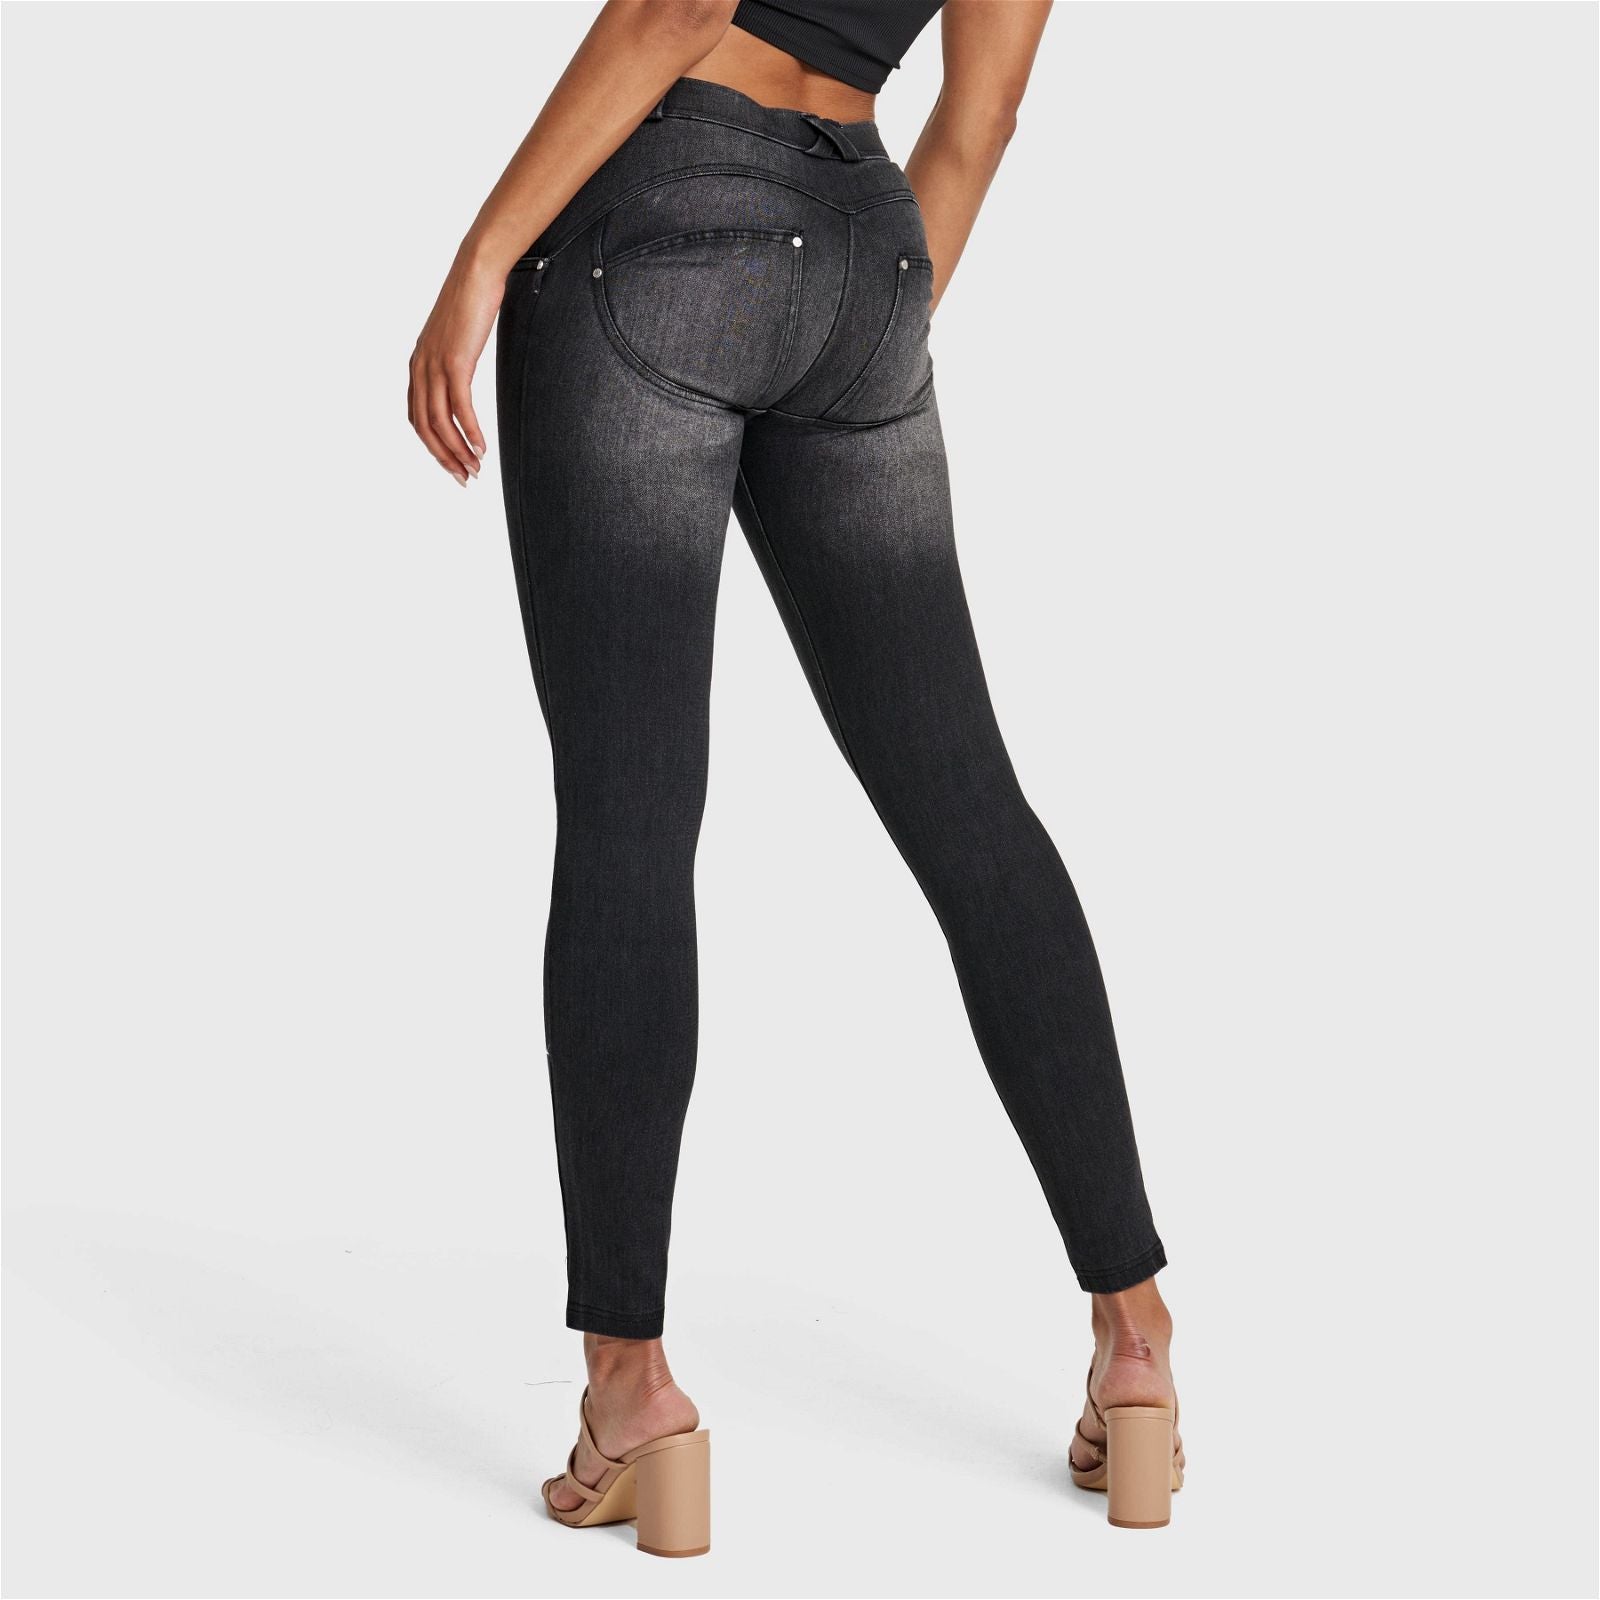 WR.UP® SNUG Jeans - Mid Rise - Full Length - Black + Black Stitching 3